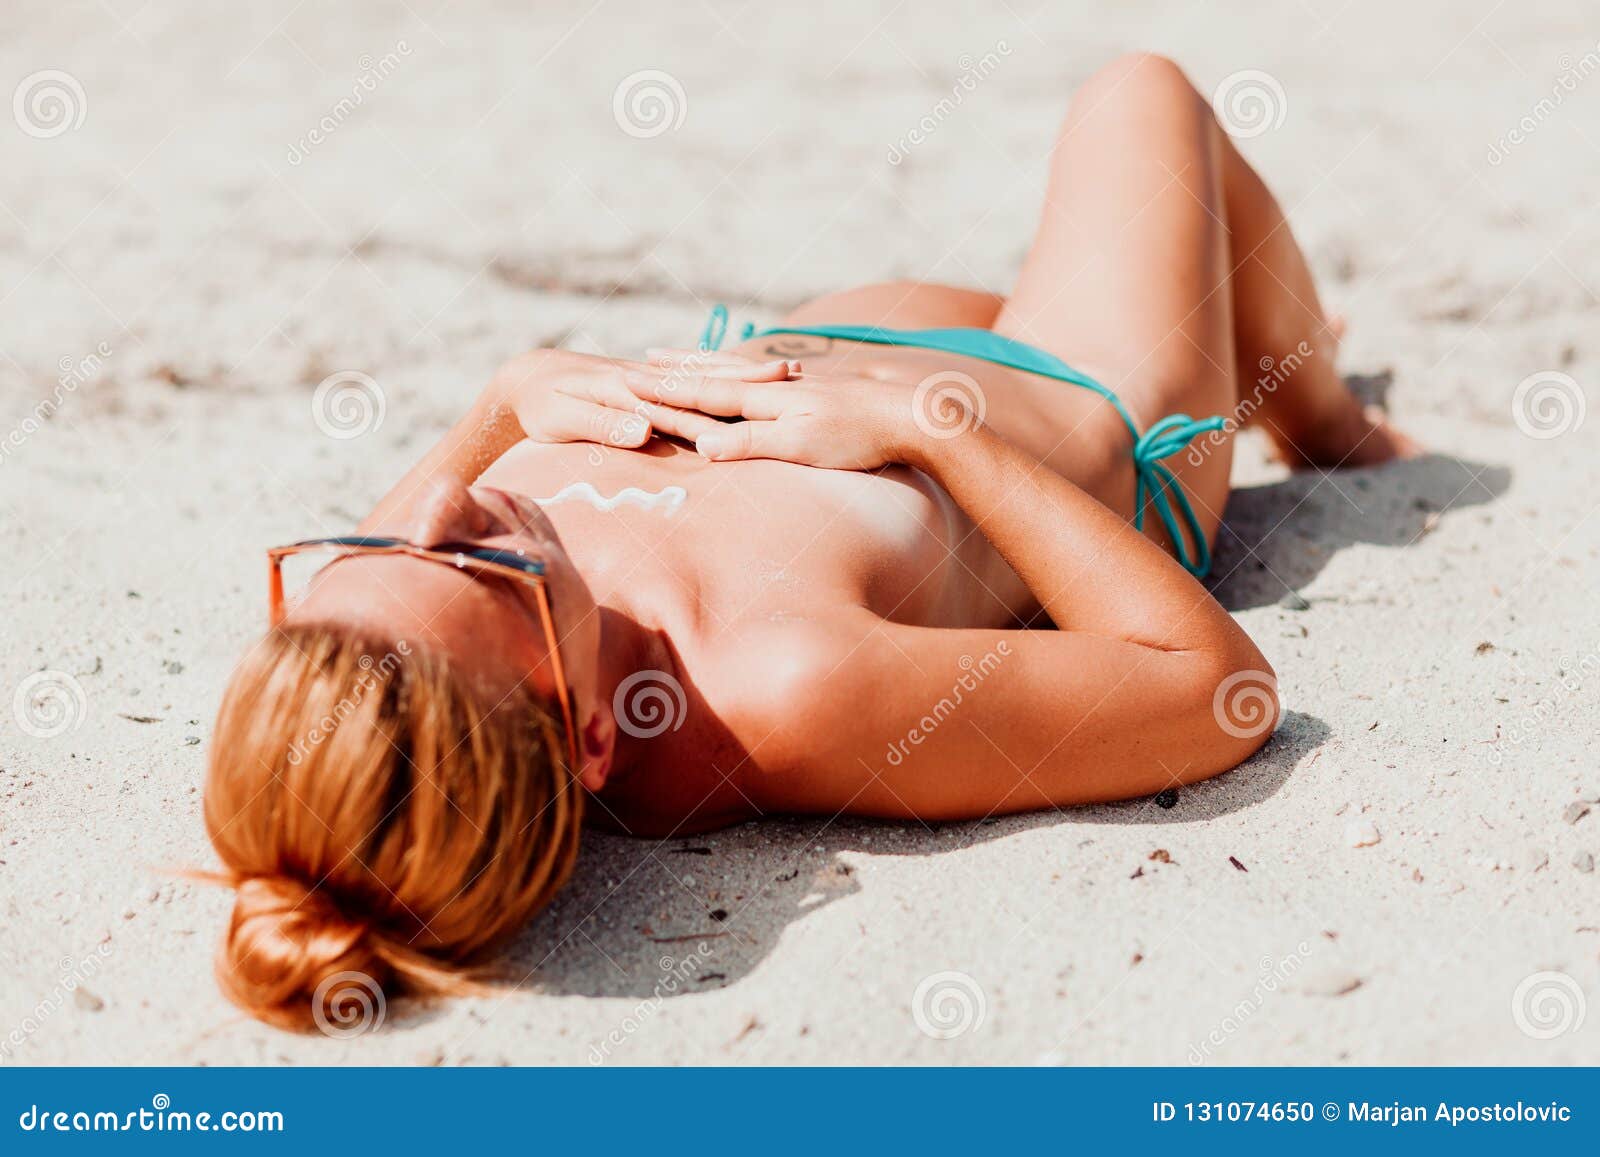 Nude Beach Topless